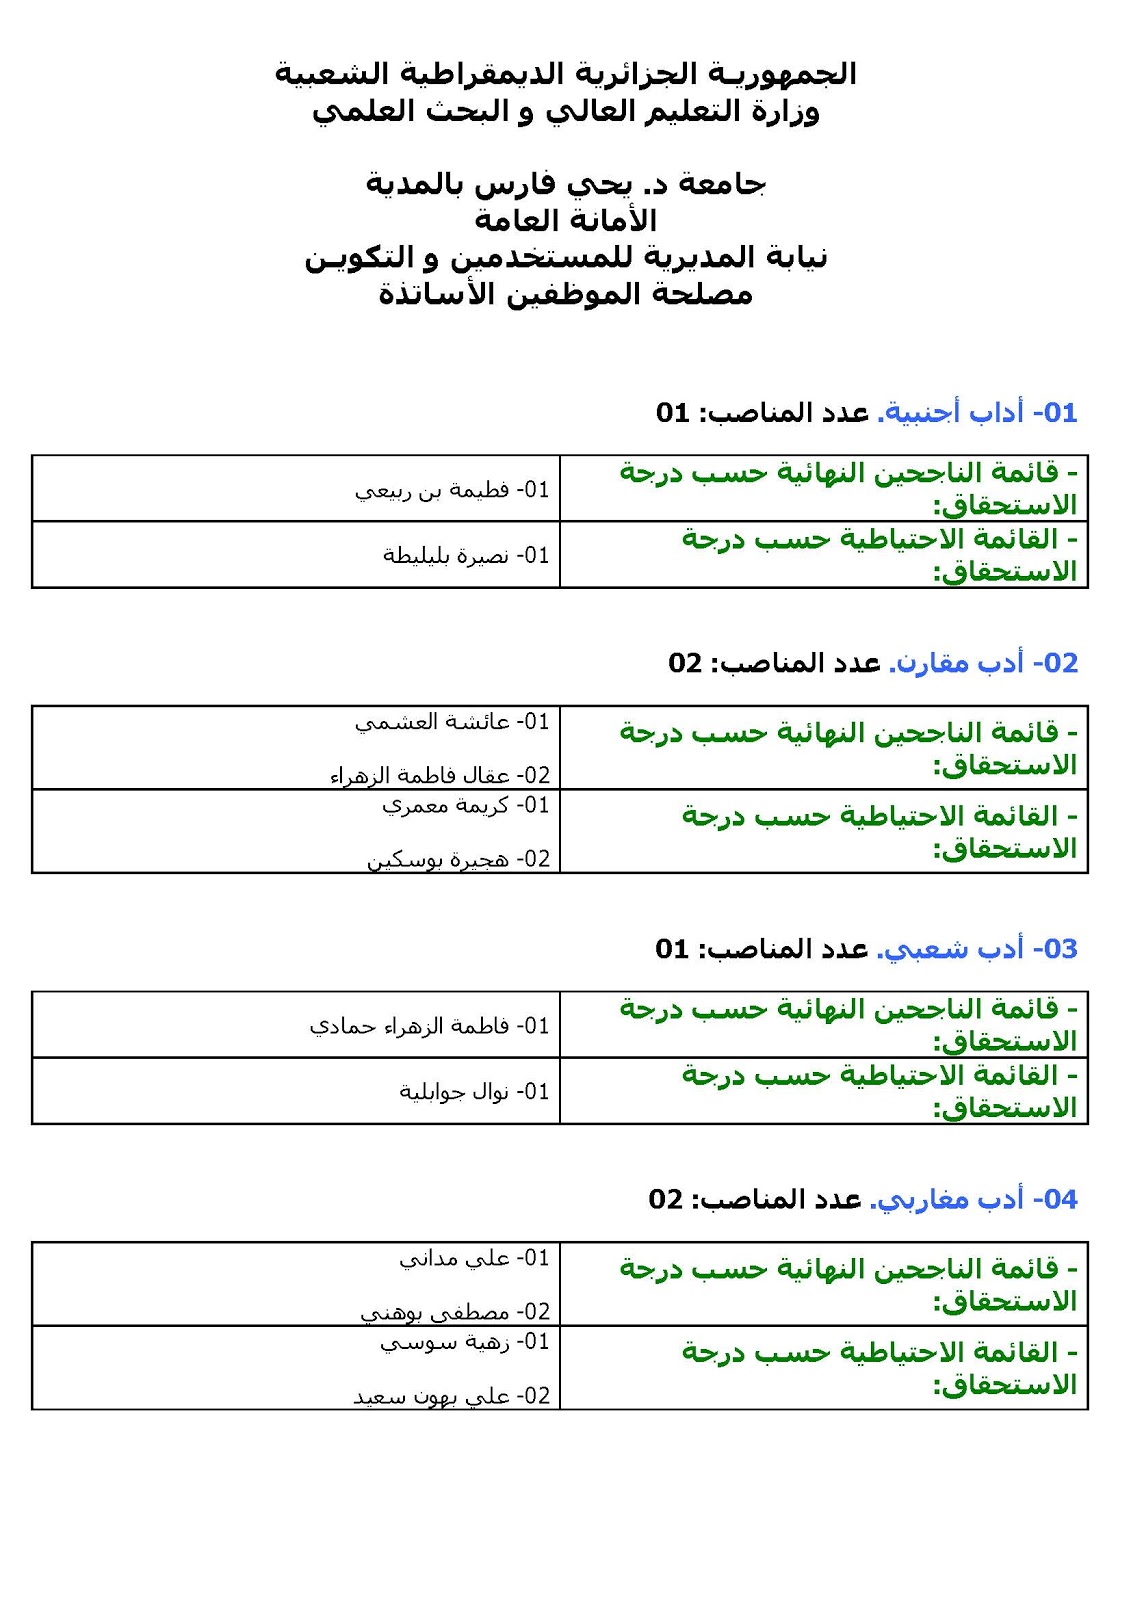  توظيف الأساتذة المساعدين 2012-2013 	 Resultats_recrutement_langues_Page_1